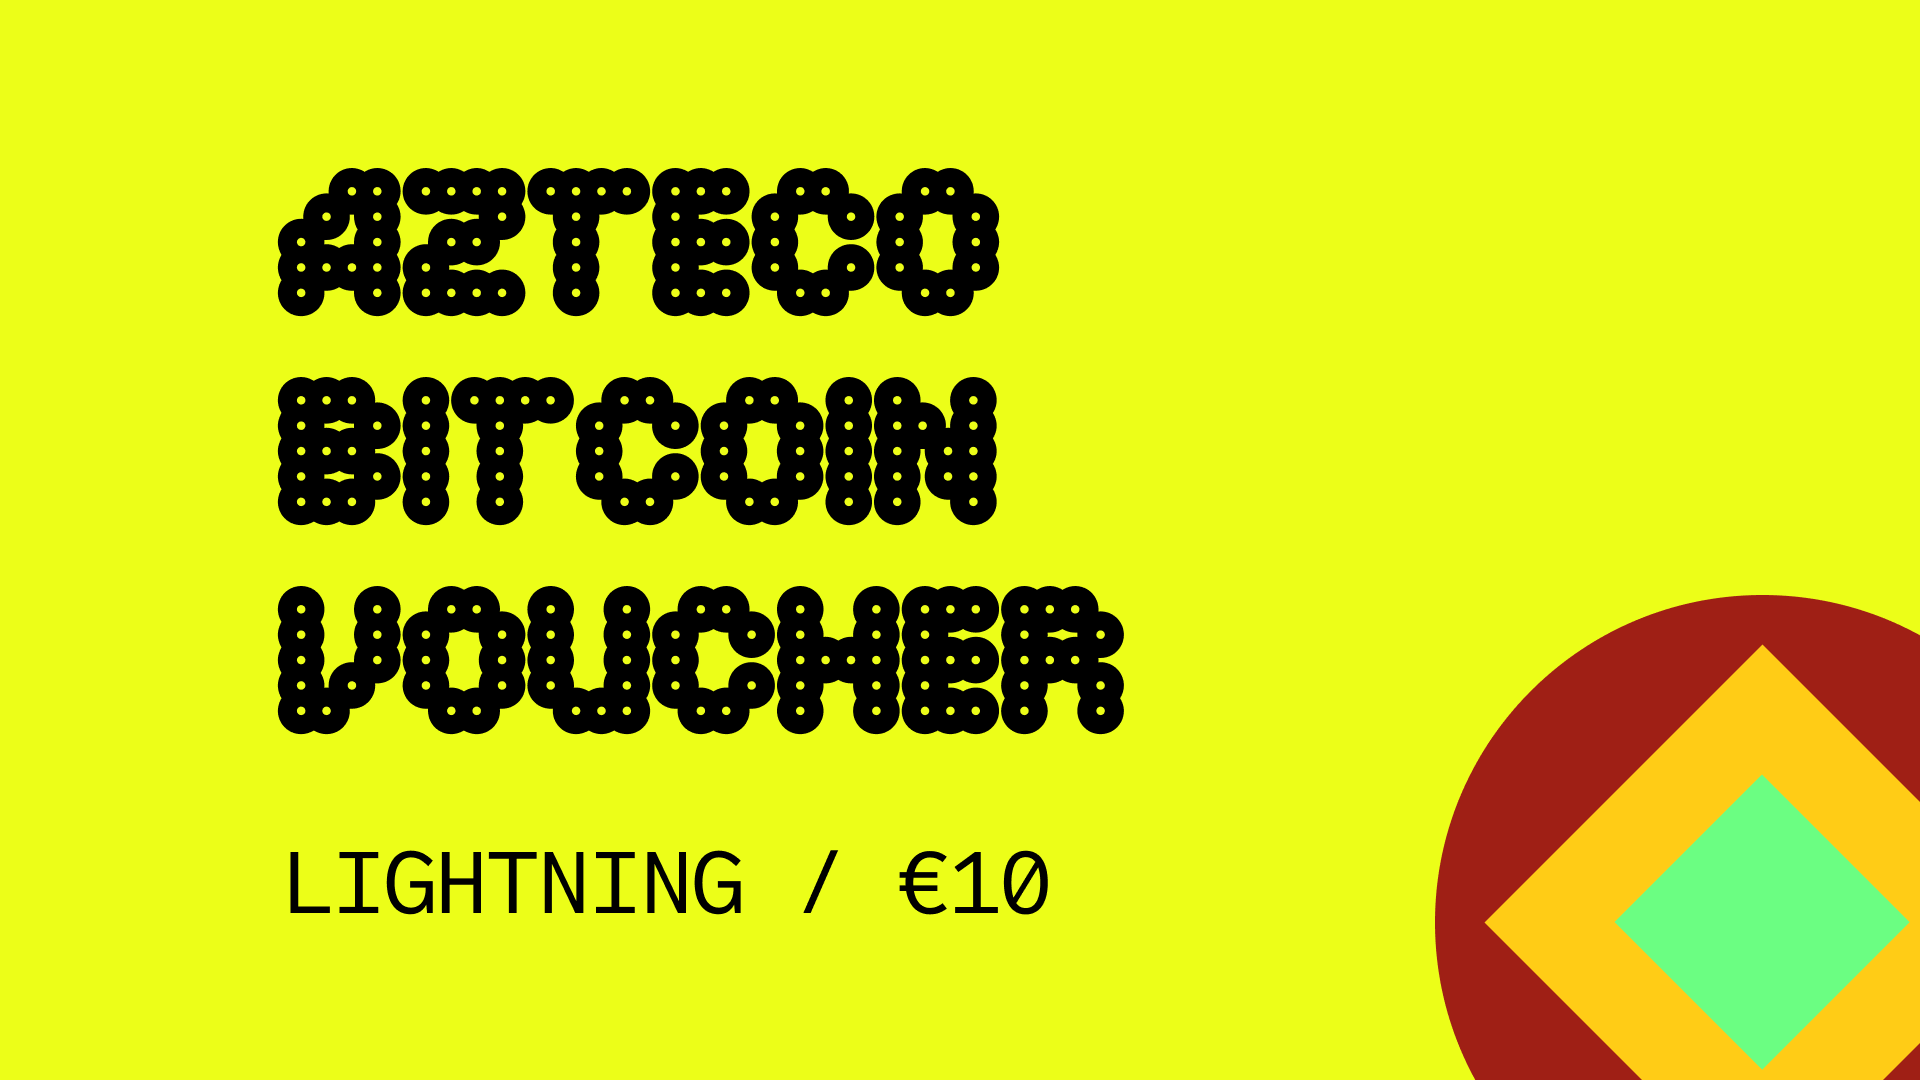 [$ 11.3] Azteco Bitcoin Lighting €10 Voucher